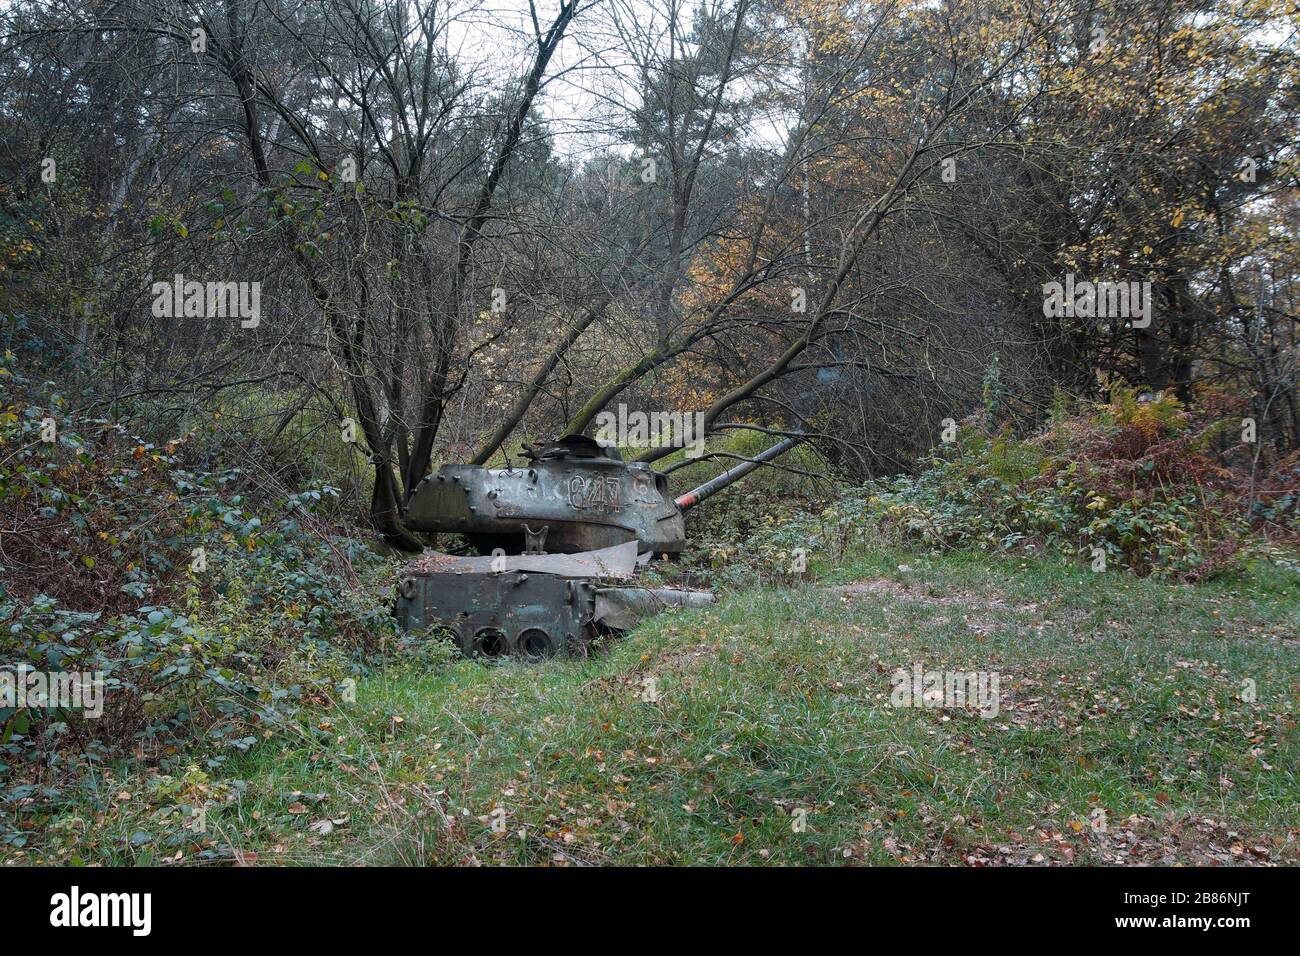 Panzerwrack M47 Patton im Brander Wald / Aachen / Germany Stock Photo